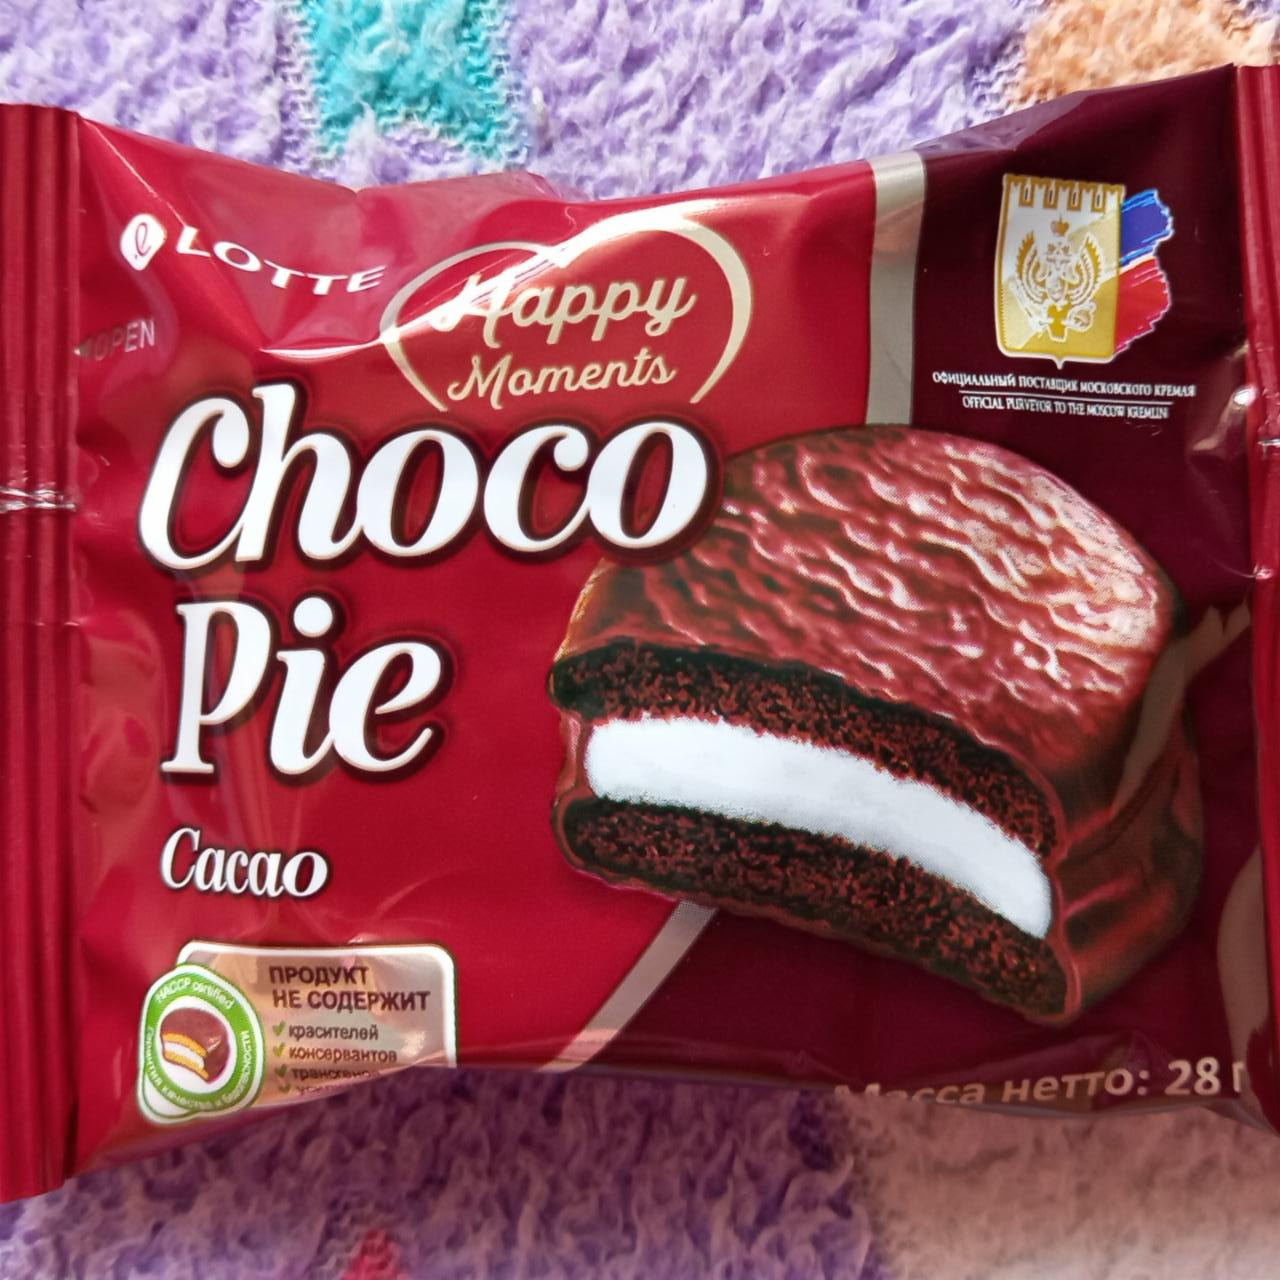 Фото - Choco Pie cacao Lotte